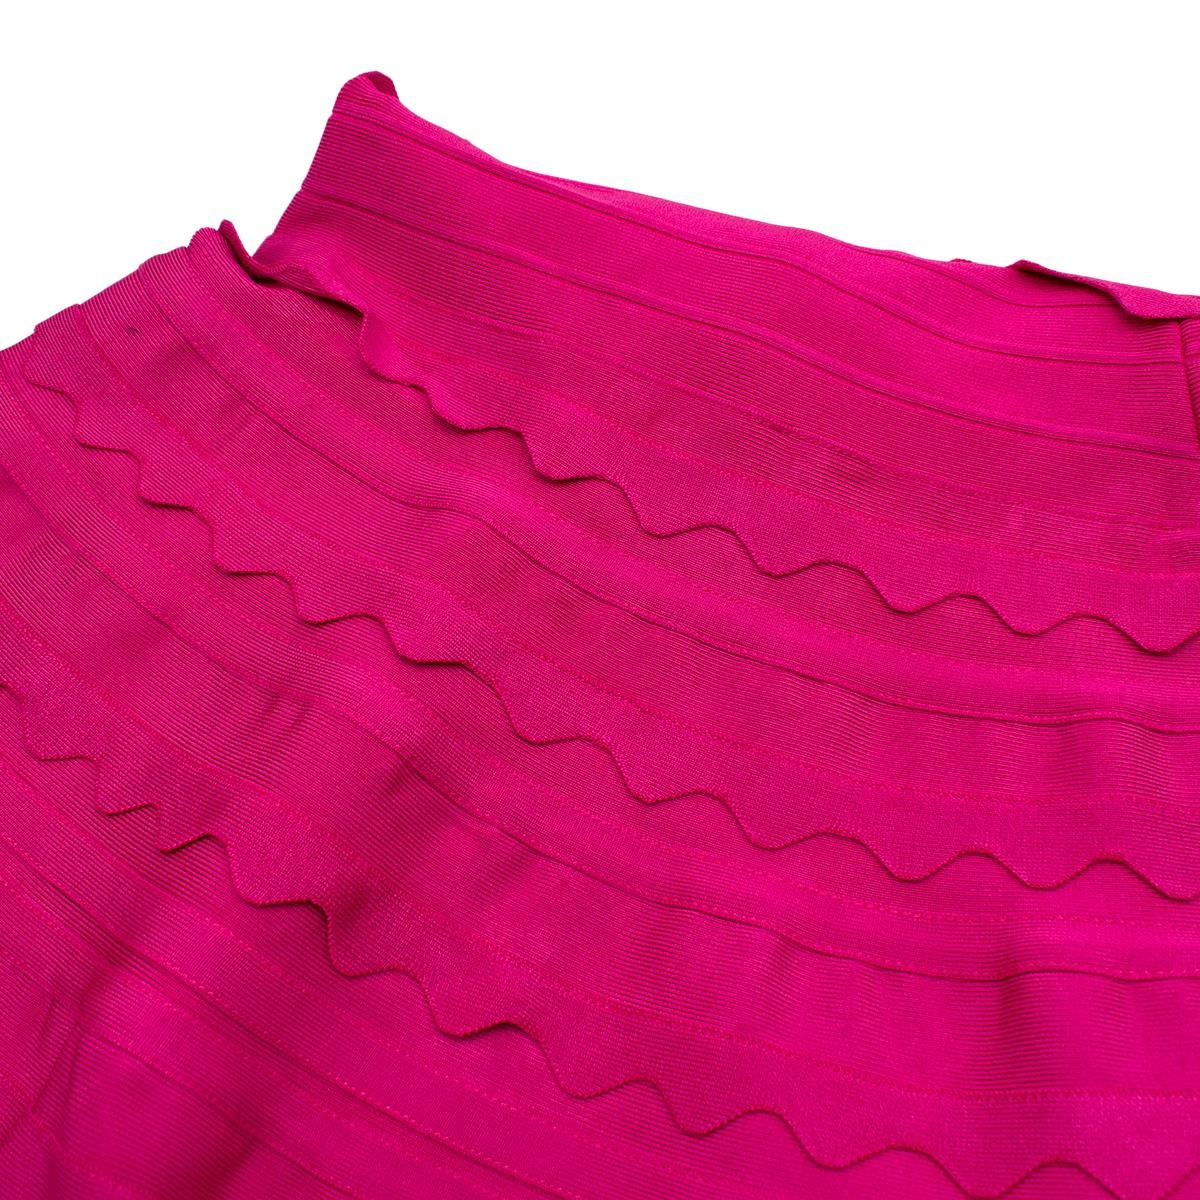 Herve Leger Nikayla Scalloped Edge Caprice Pink Dress  - Us size 6 For Sale 1